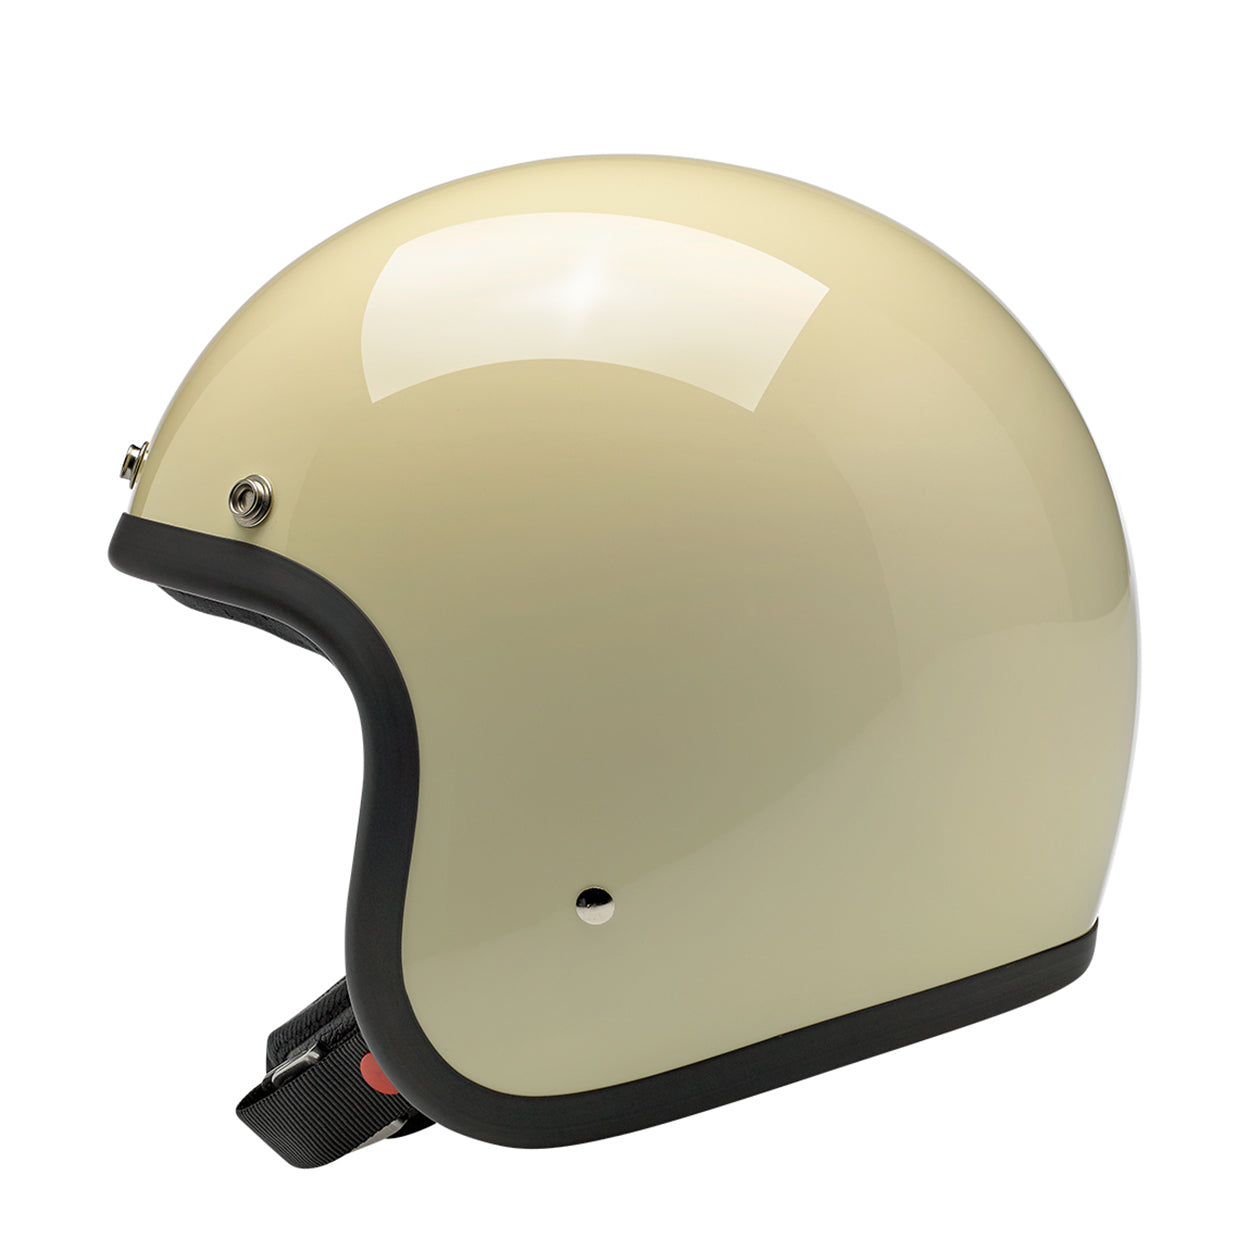 CLOSEOUT Bonanza Helmet - Gloss Vintage White